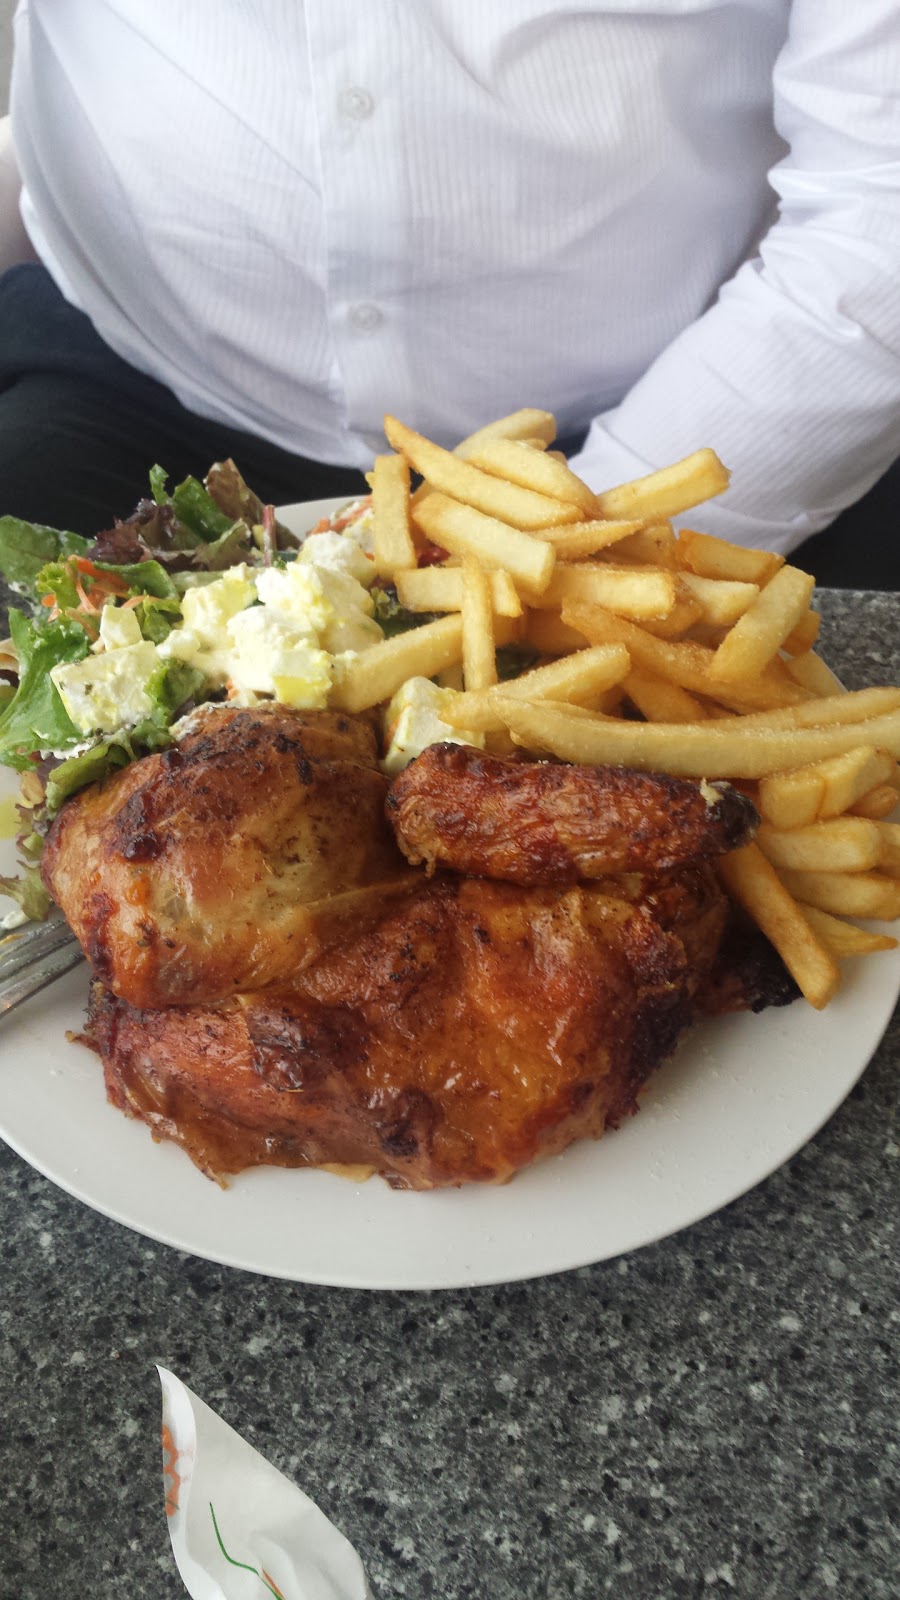 ChickN Dlish | meal takeaway | 8/1-7 Belgrave-Hallam Rd, Hallam VIC 3803, Australia | 0397024488 OR +61 3 9702 4488